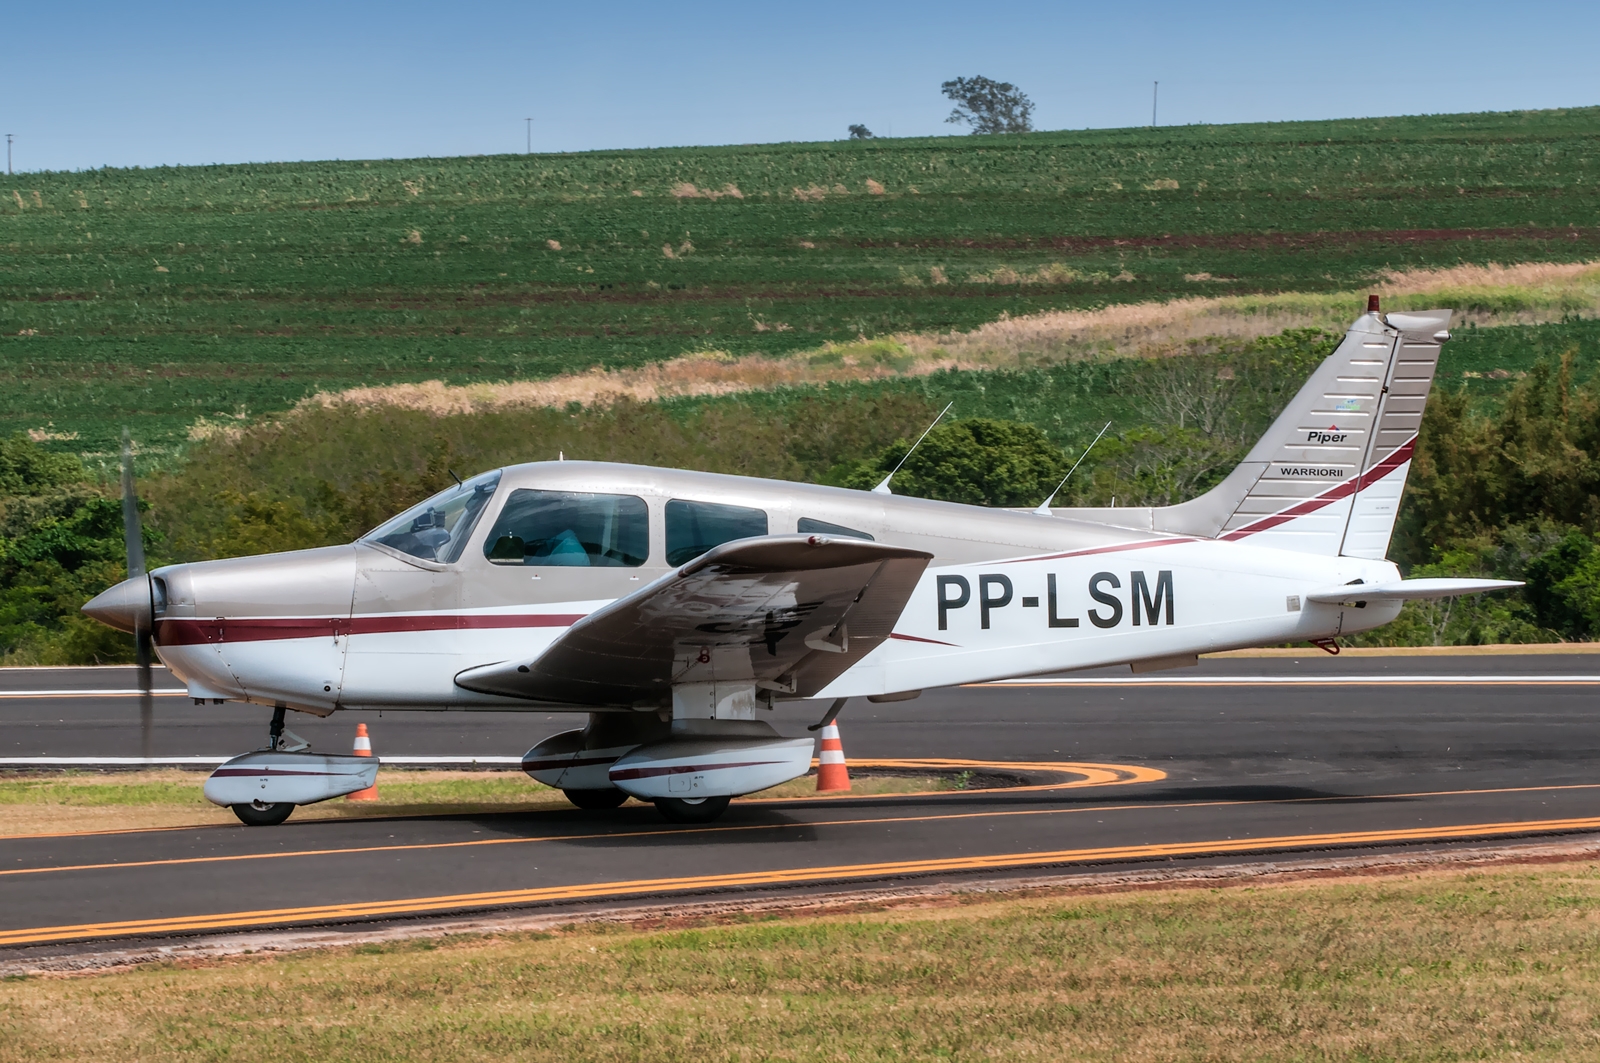 PP-LSM - Piper PA-28-161 Warrior II